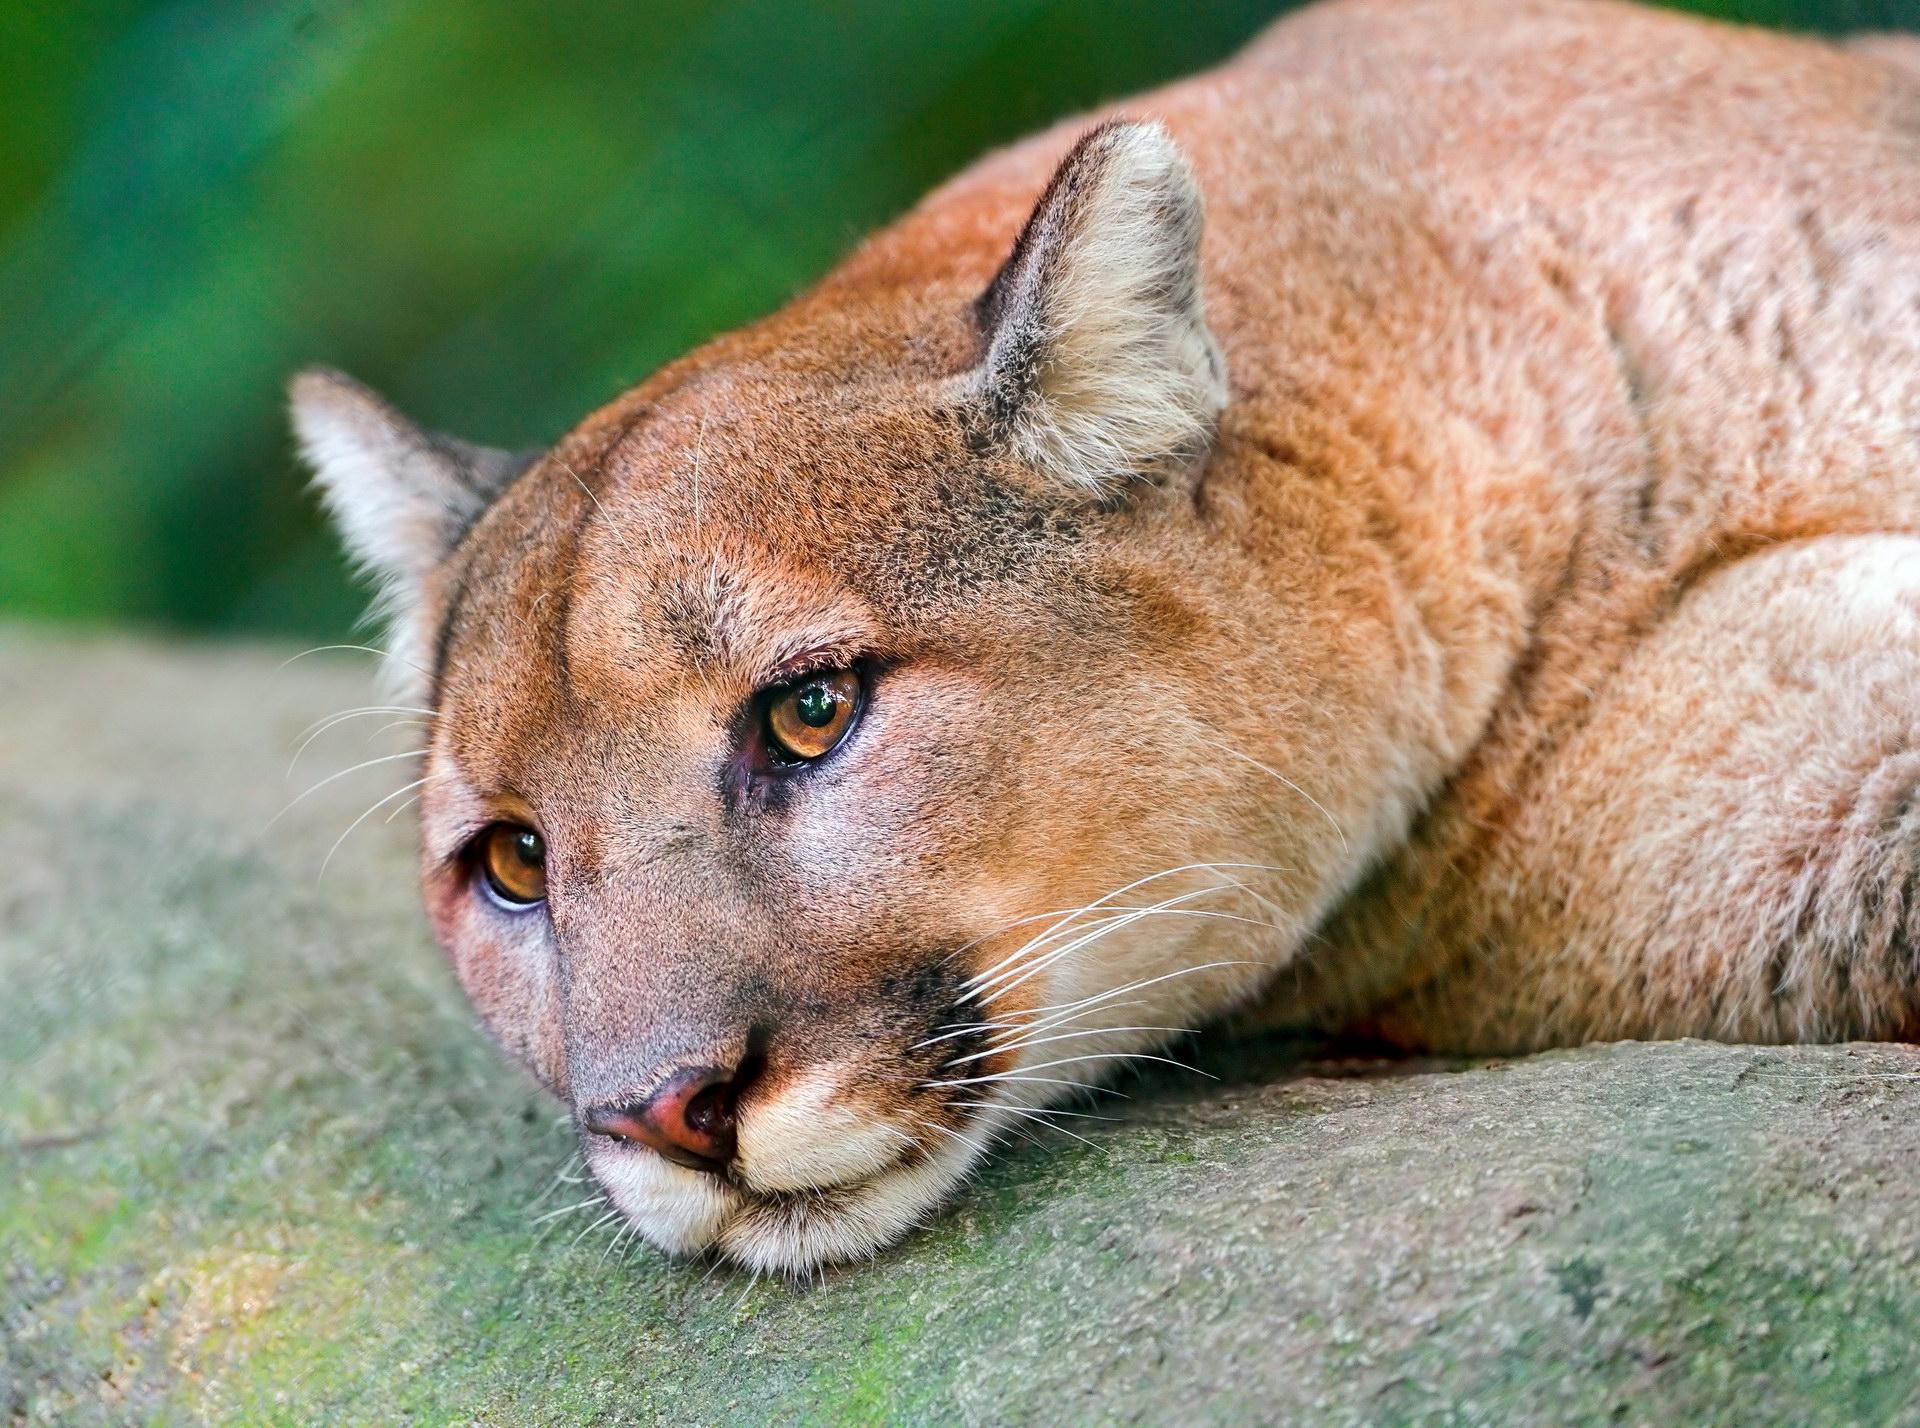 Sad cougar